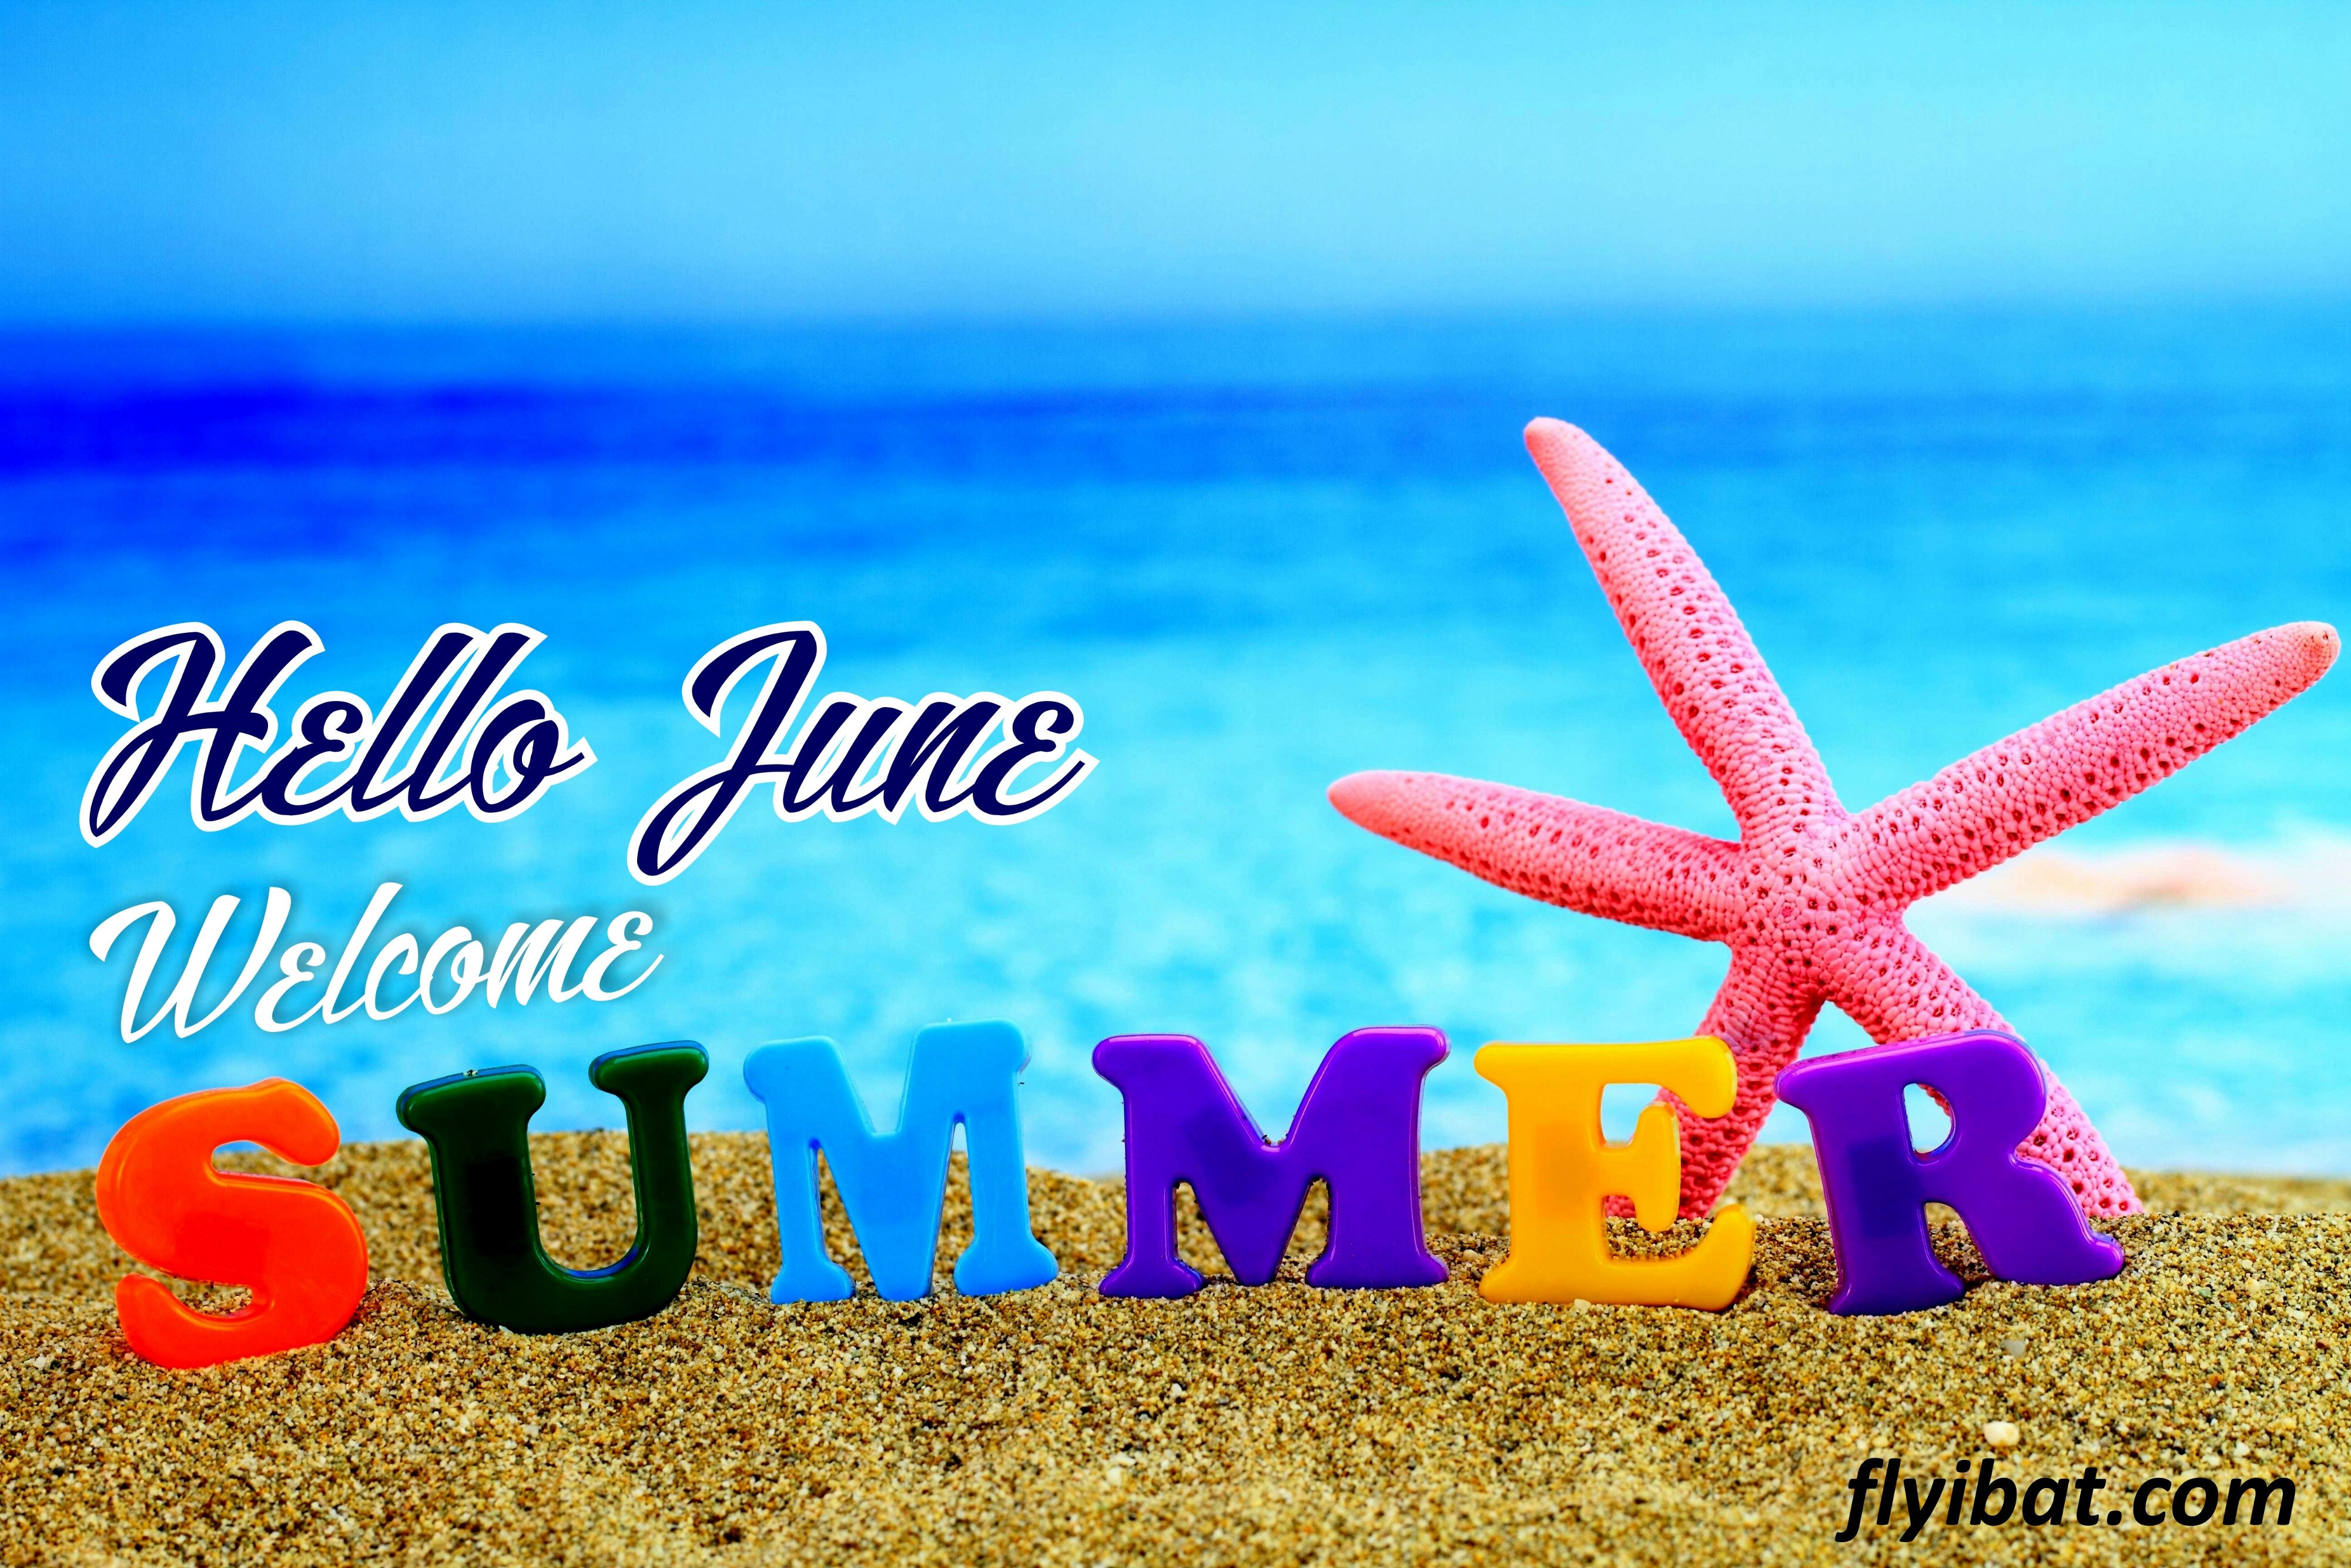 flyibat on Twitter: "#HappyNewMonth..Welcome #June..Welcome  #Summer..#flyibat. https://t.co/ubNm9eZbdW" / Twitter